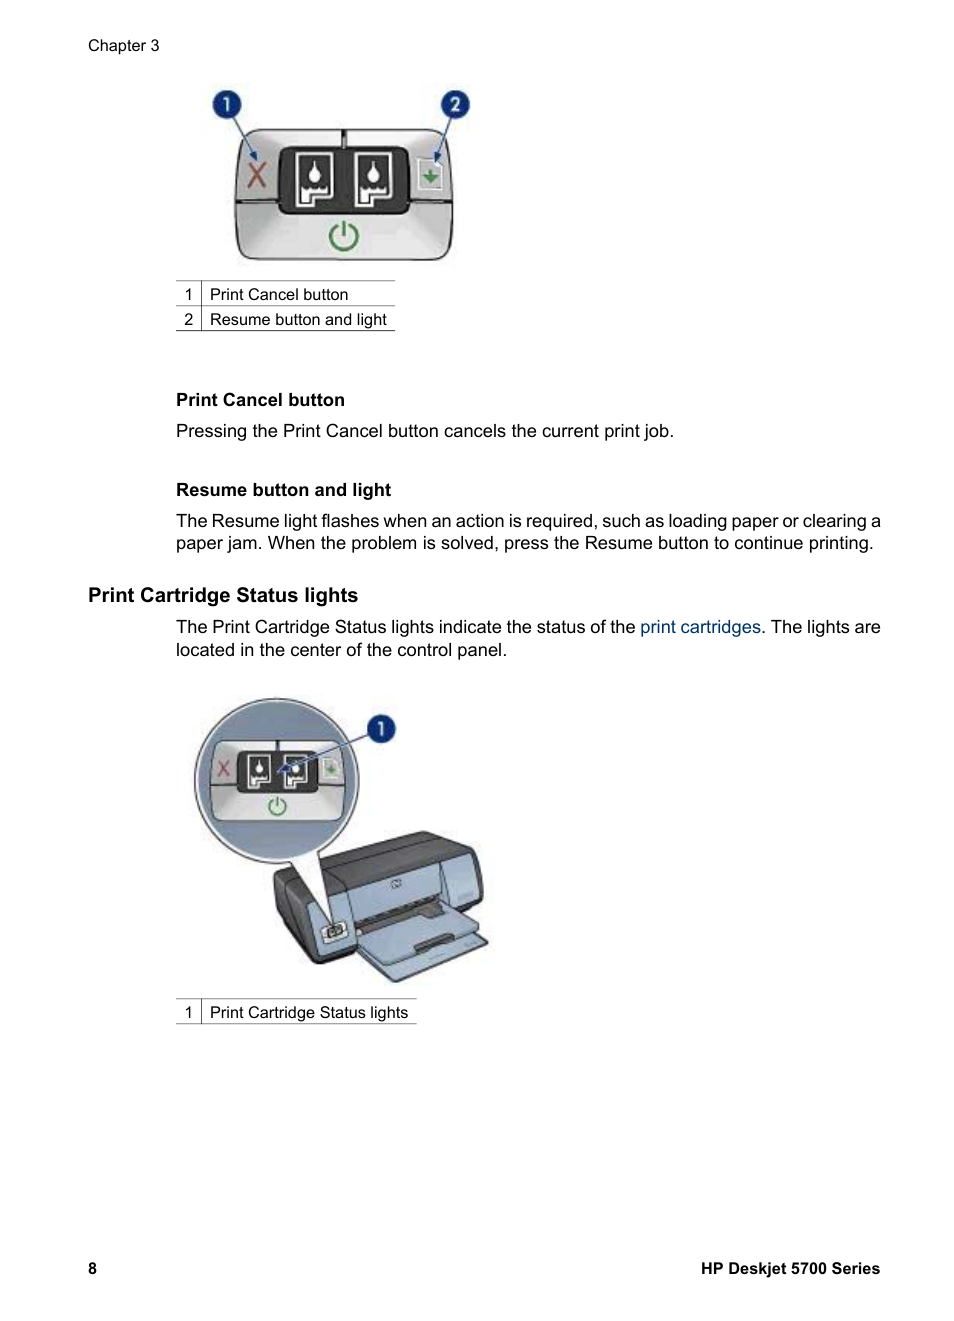 Print cancel button, Resume button and light, Print cartridge status